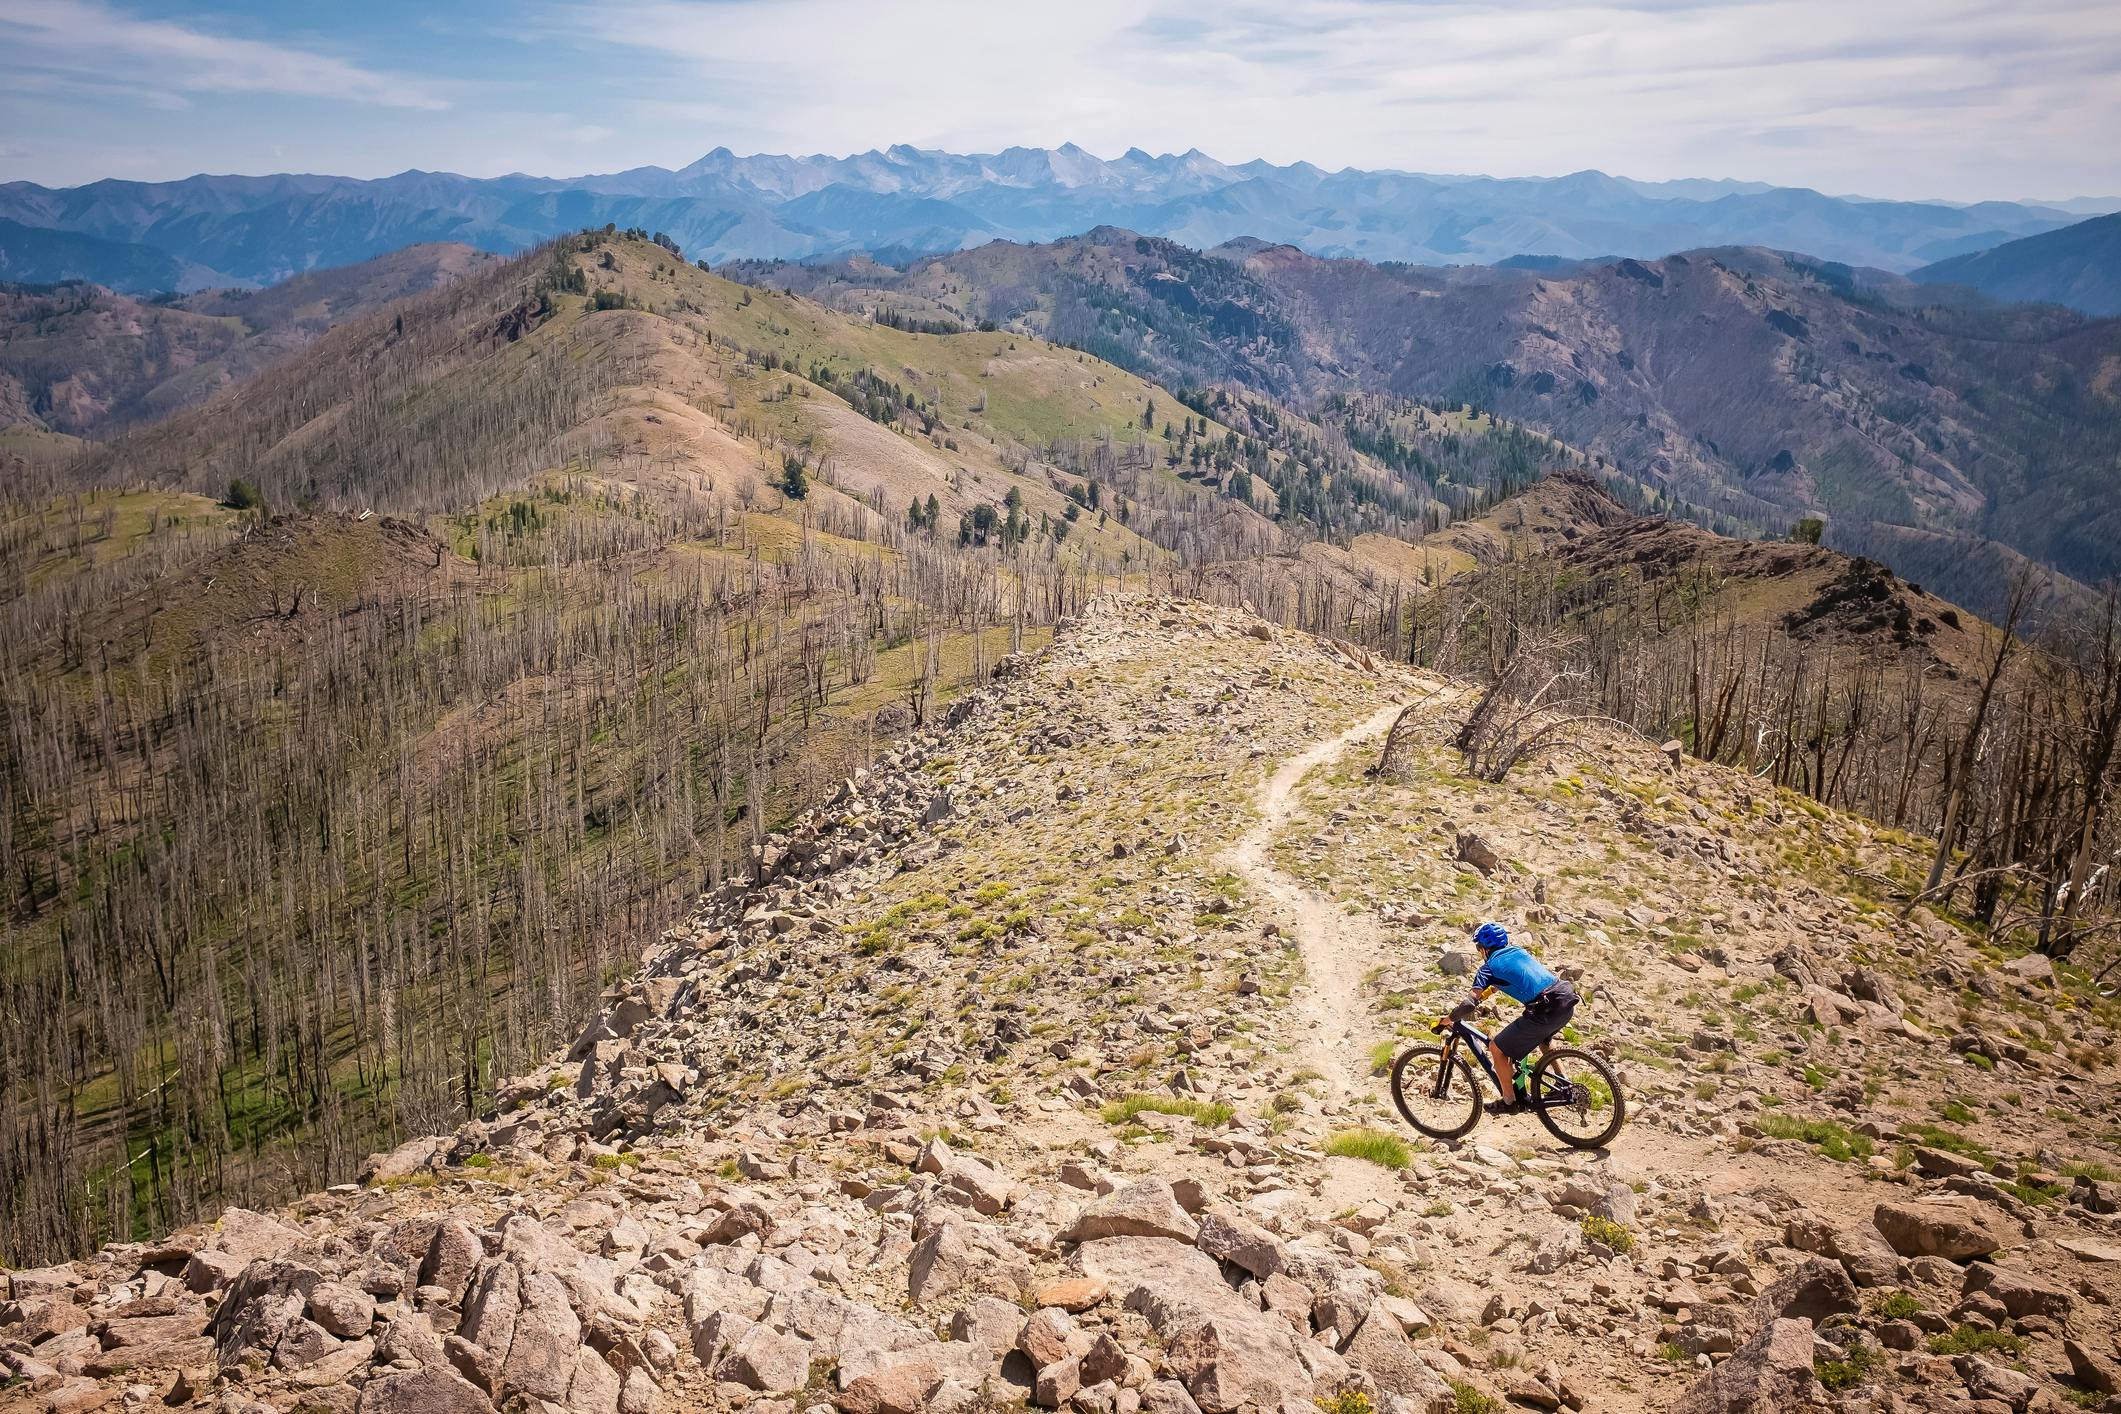 A person on a mountain bike navigates their way down a rocky trail